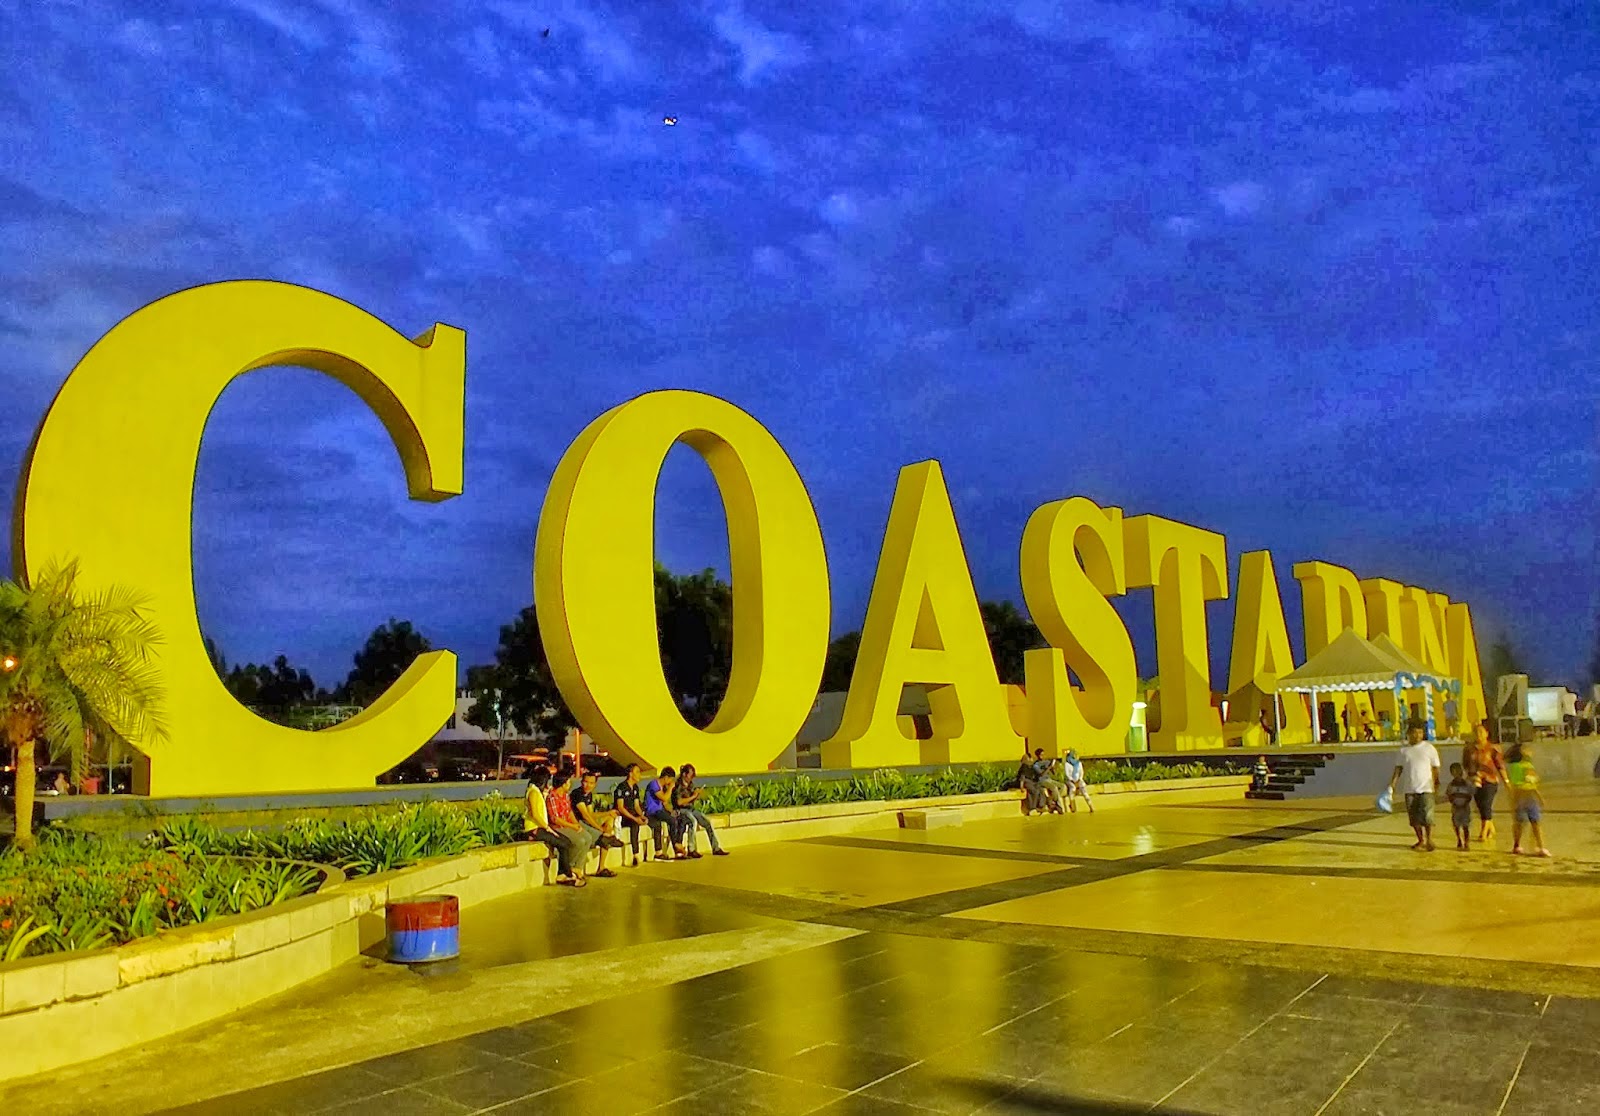 Coastarina : Harga Tiket, Foto, Lokasi, Fasilitas dan Spot